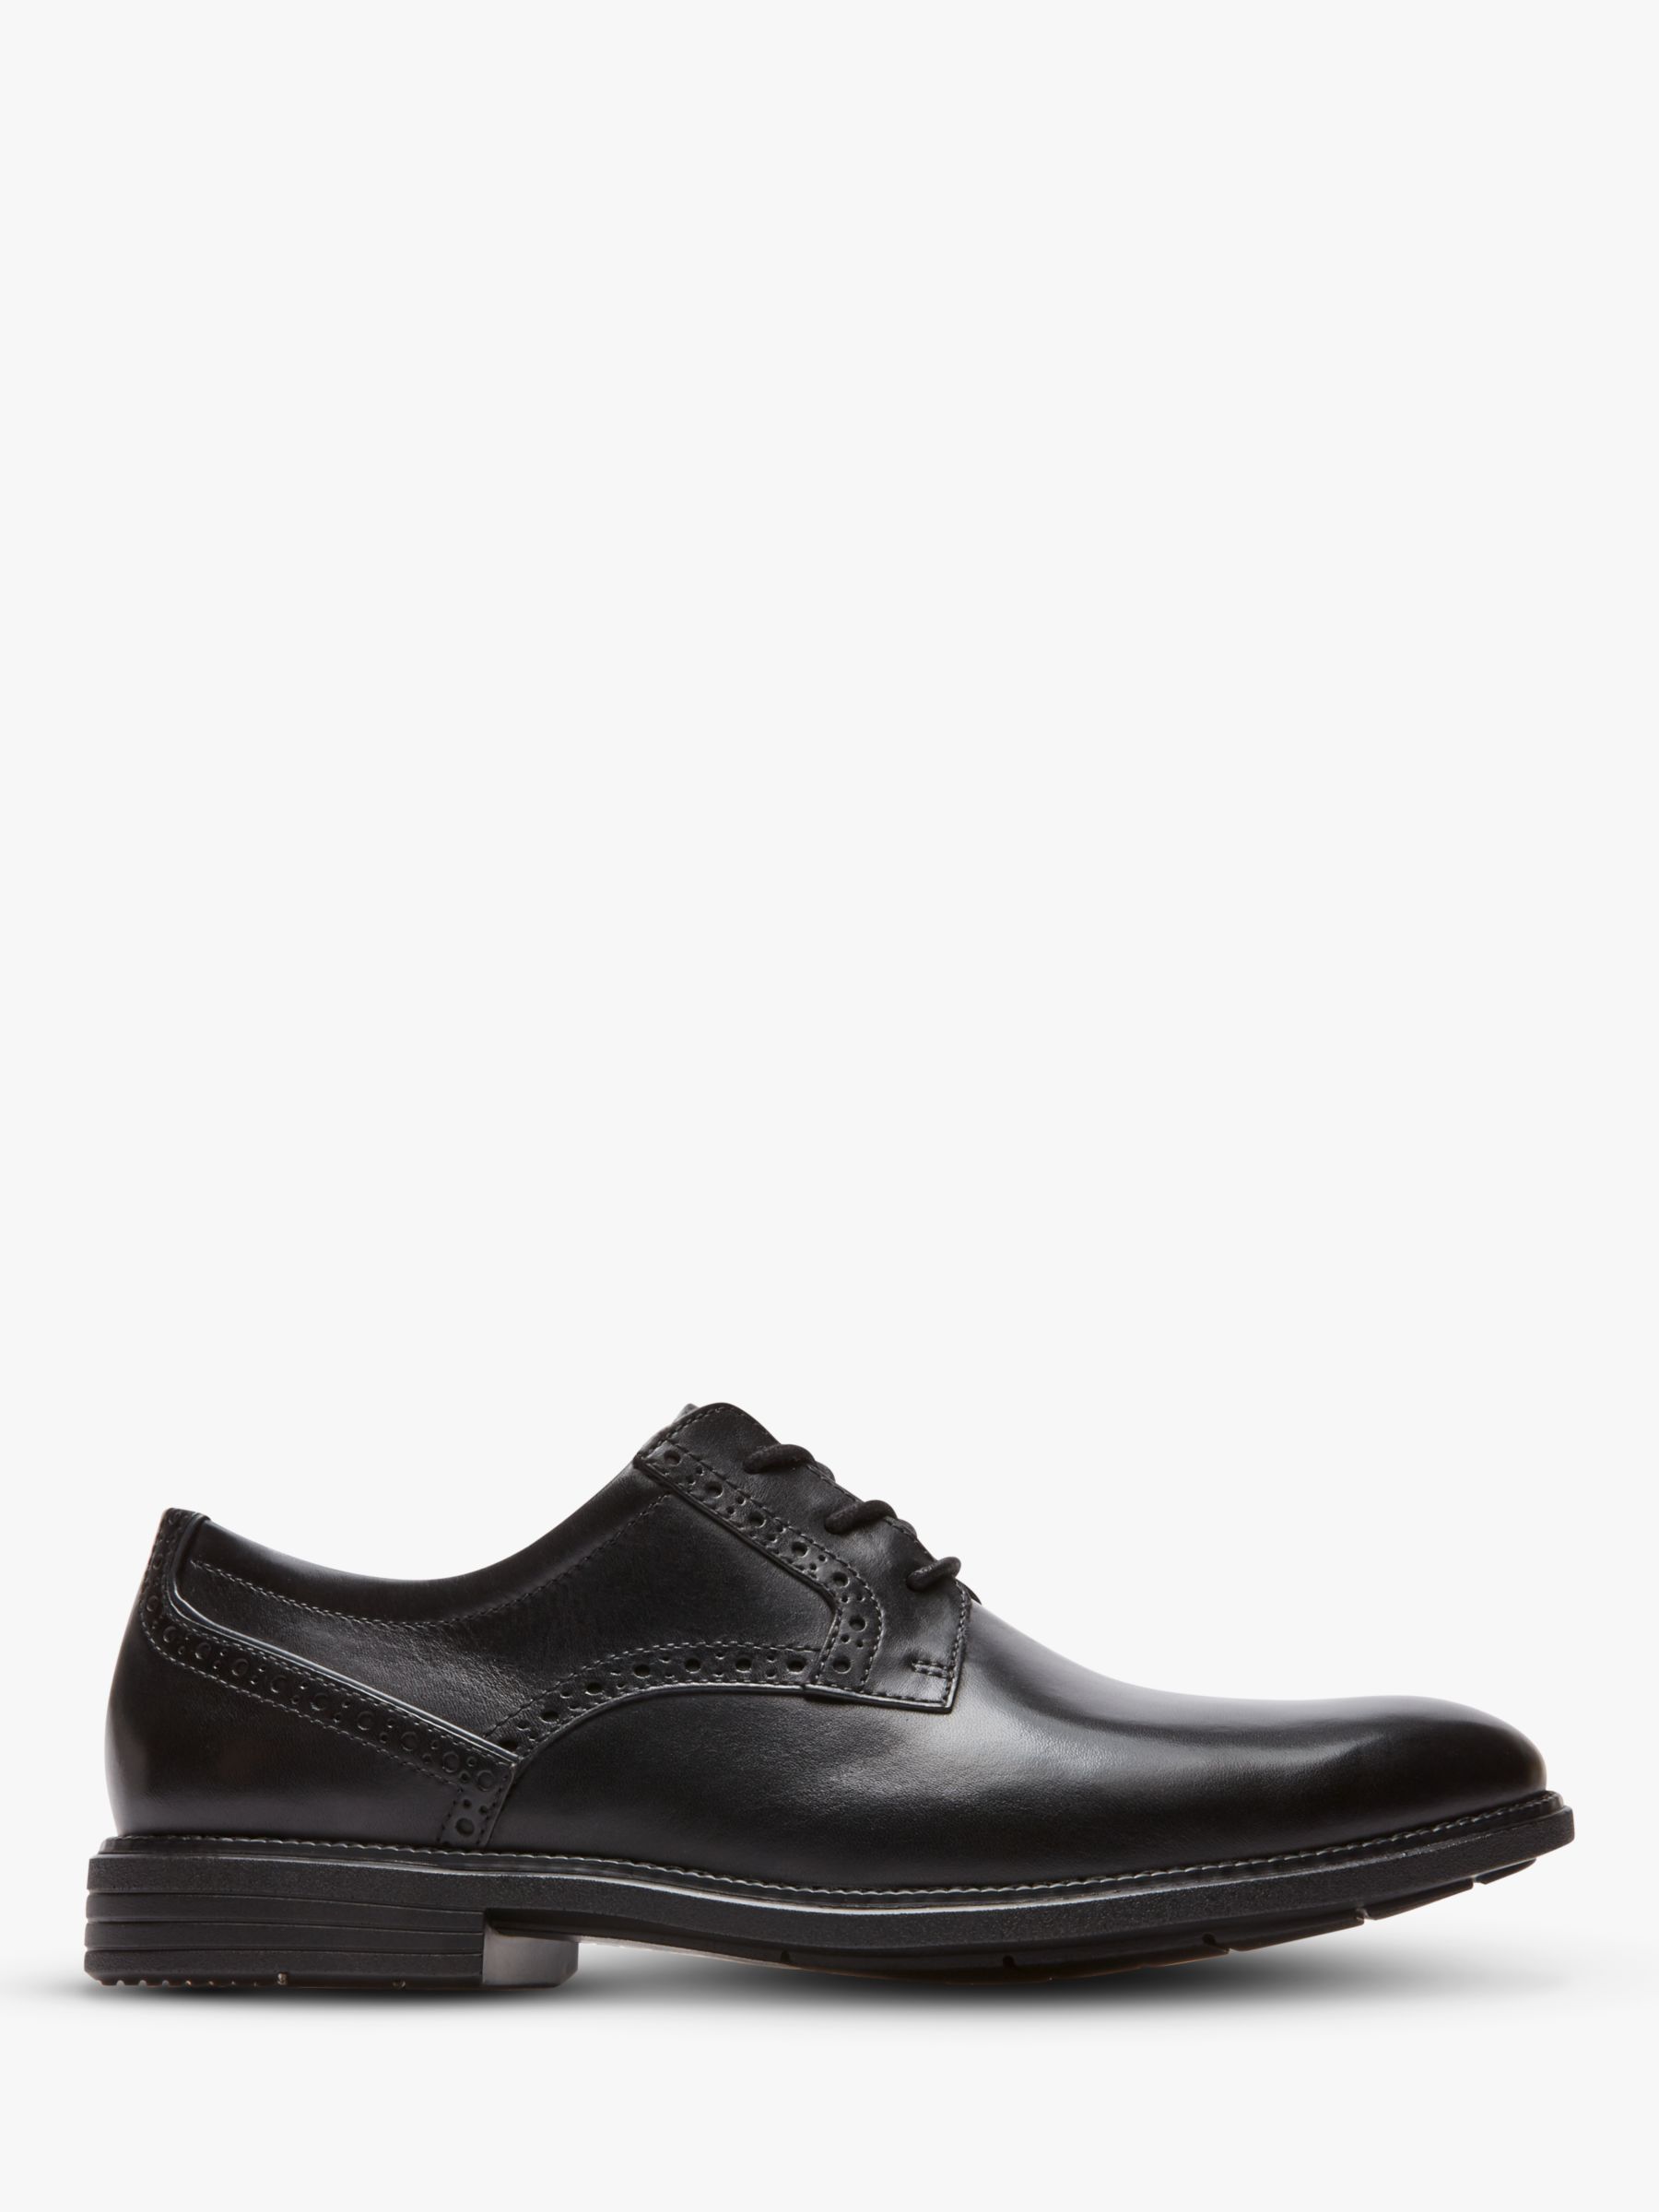 Rockport Madson Derby Leather Shoes, Black